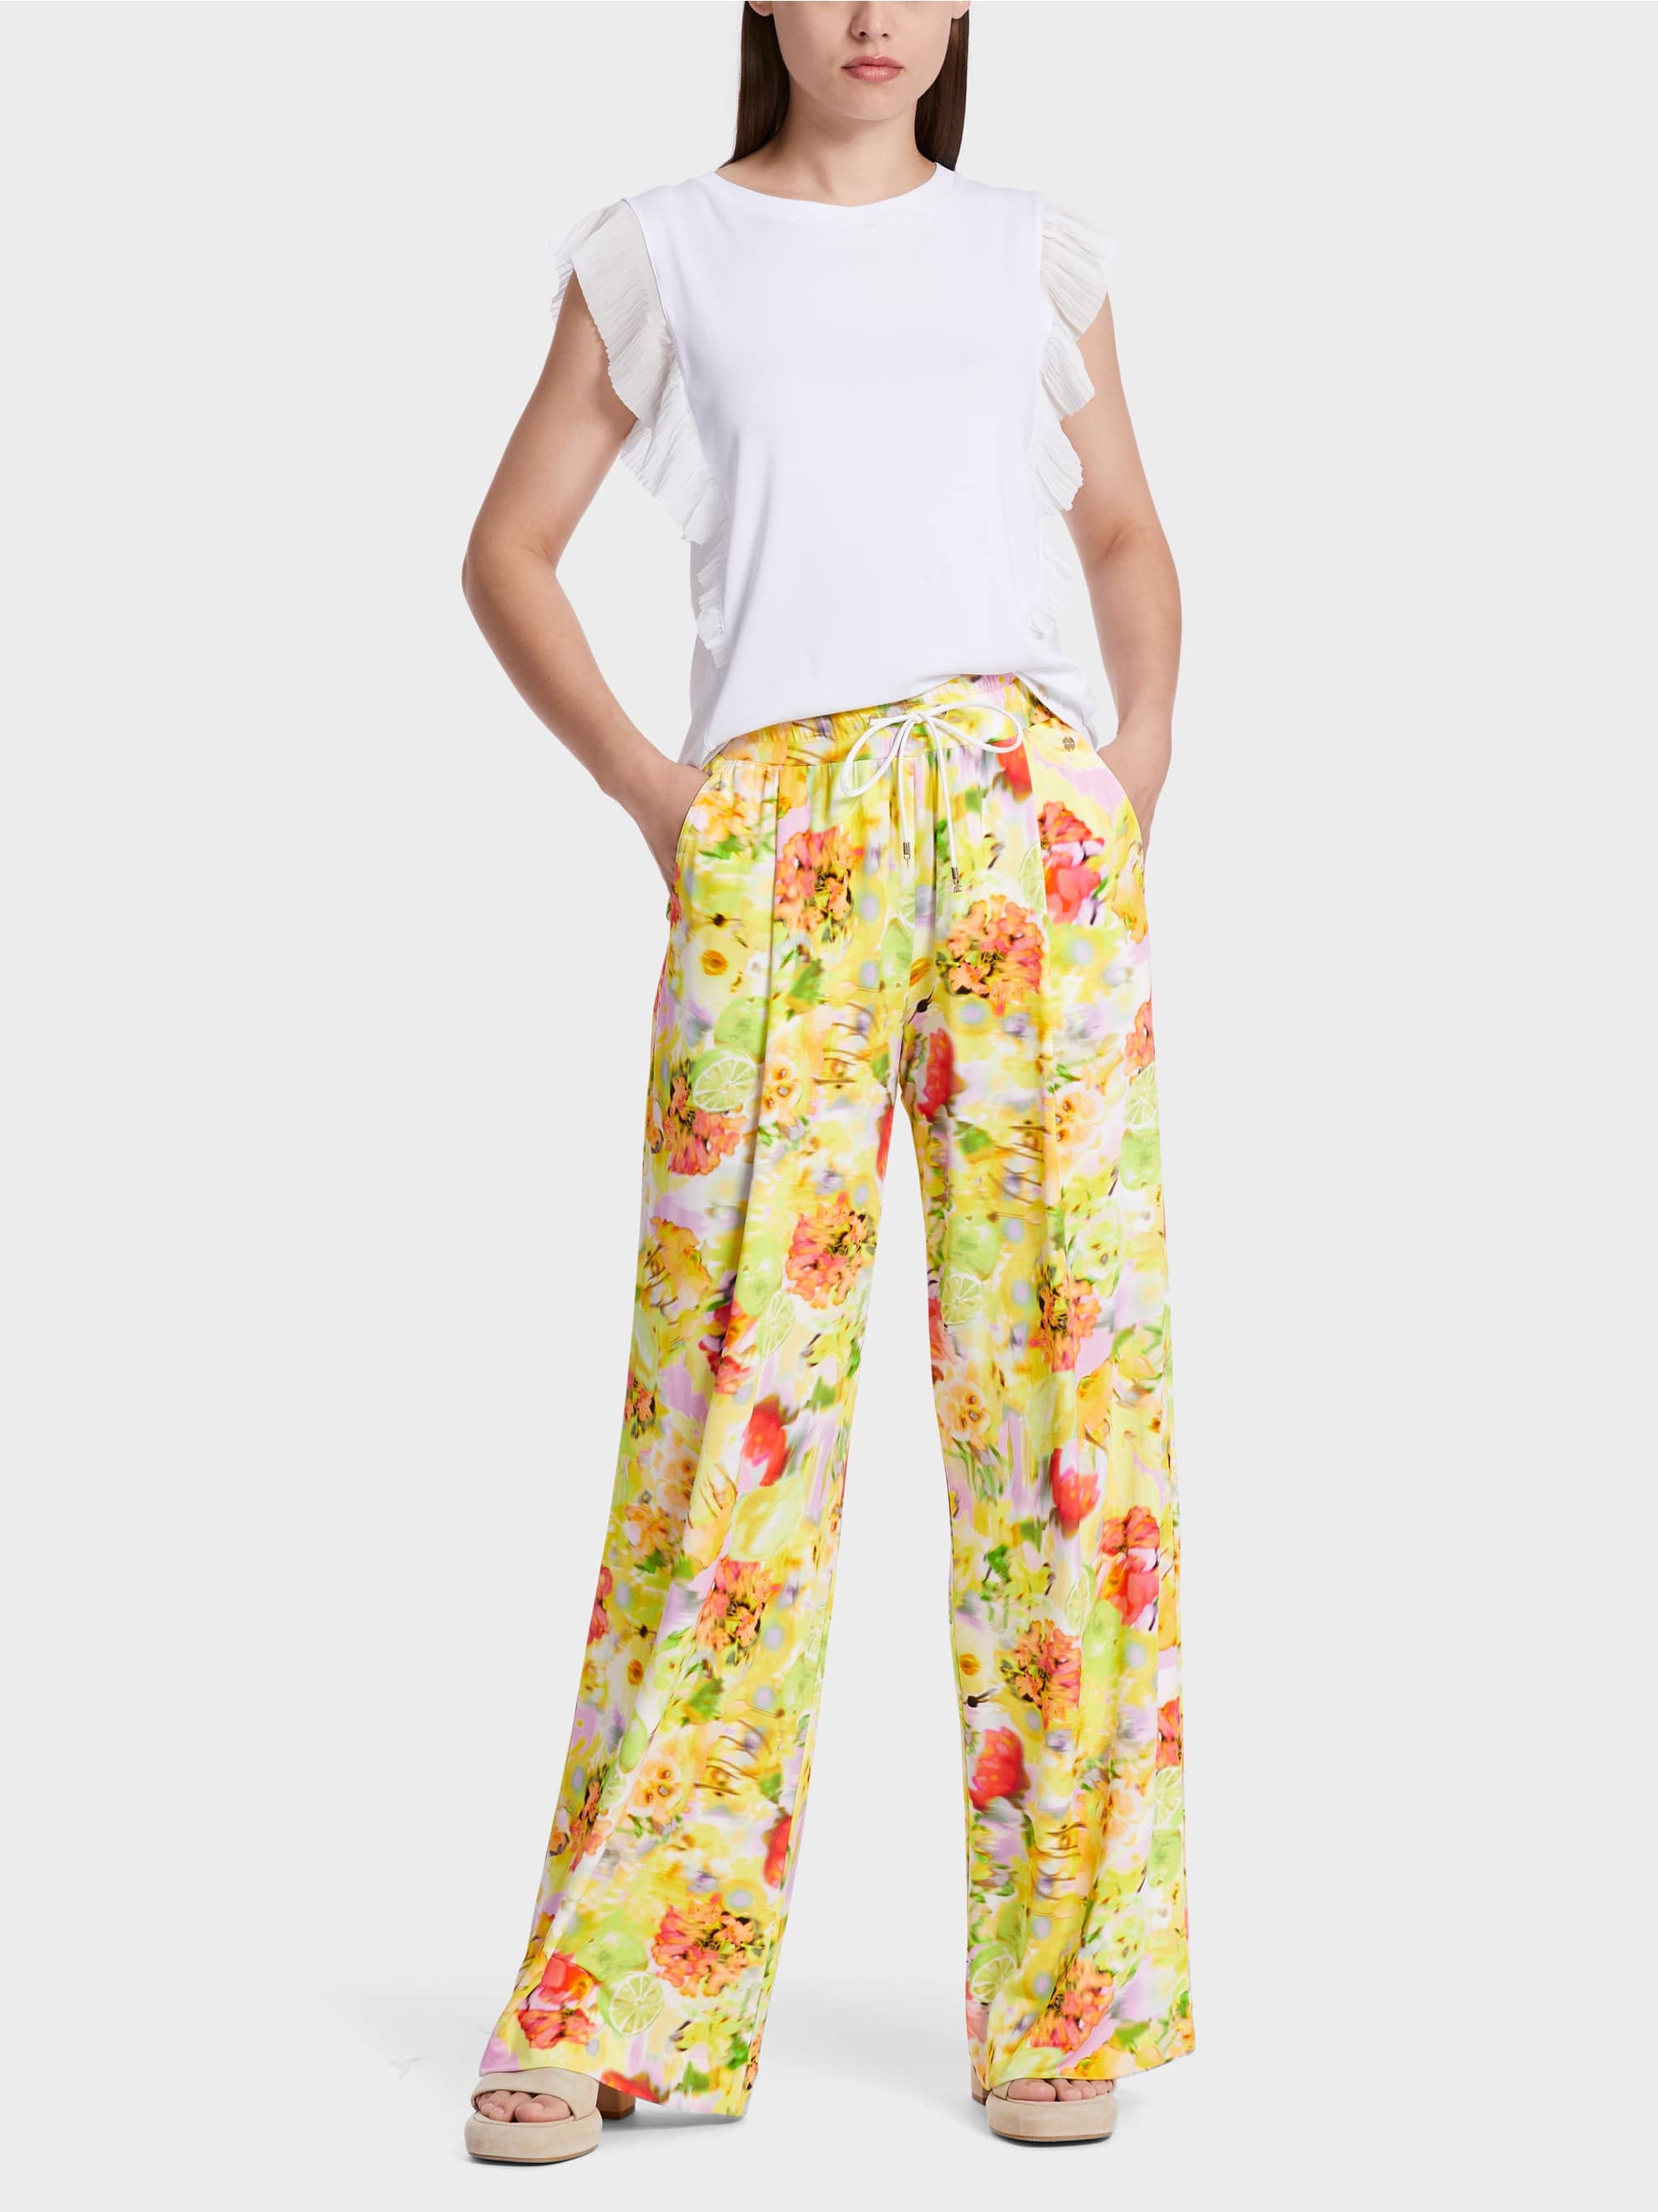 Wedi Pants In Floral Design_Wc 81.37 J22_420_04